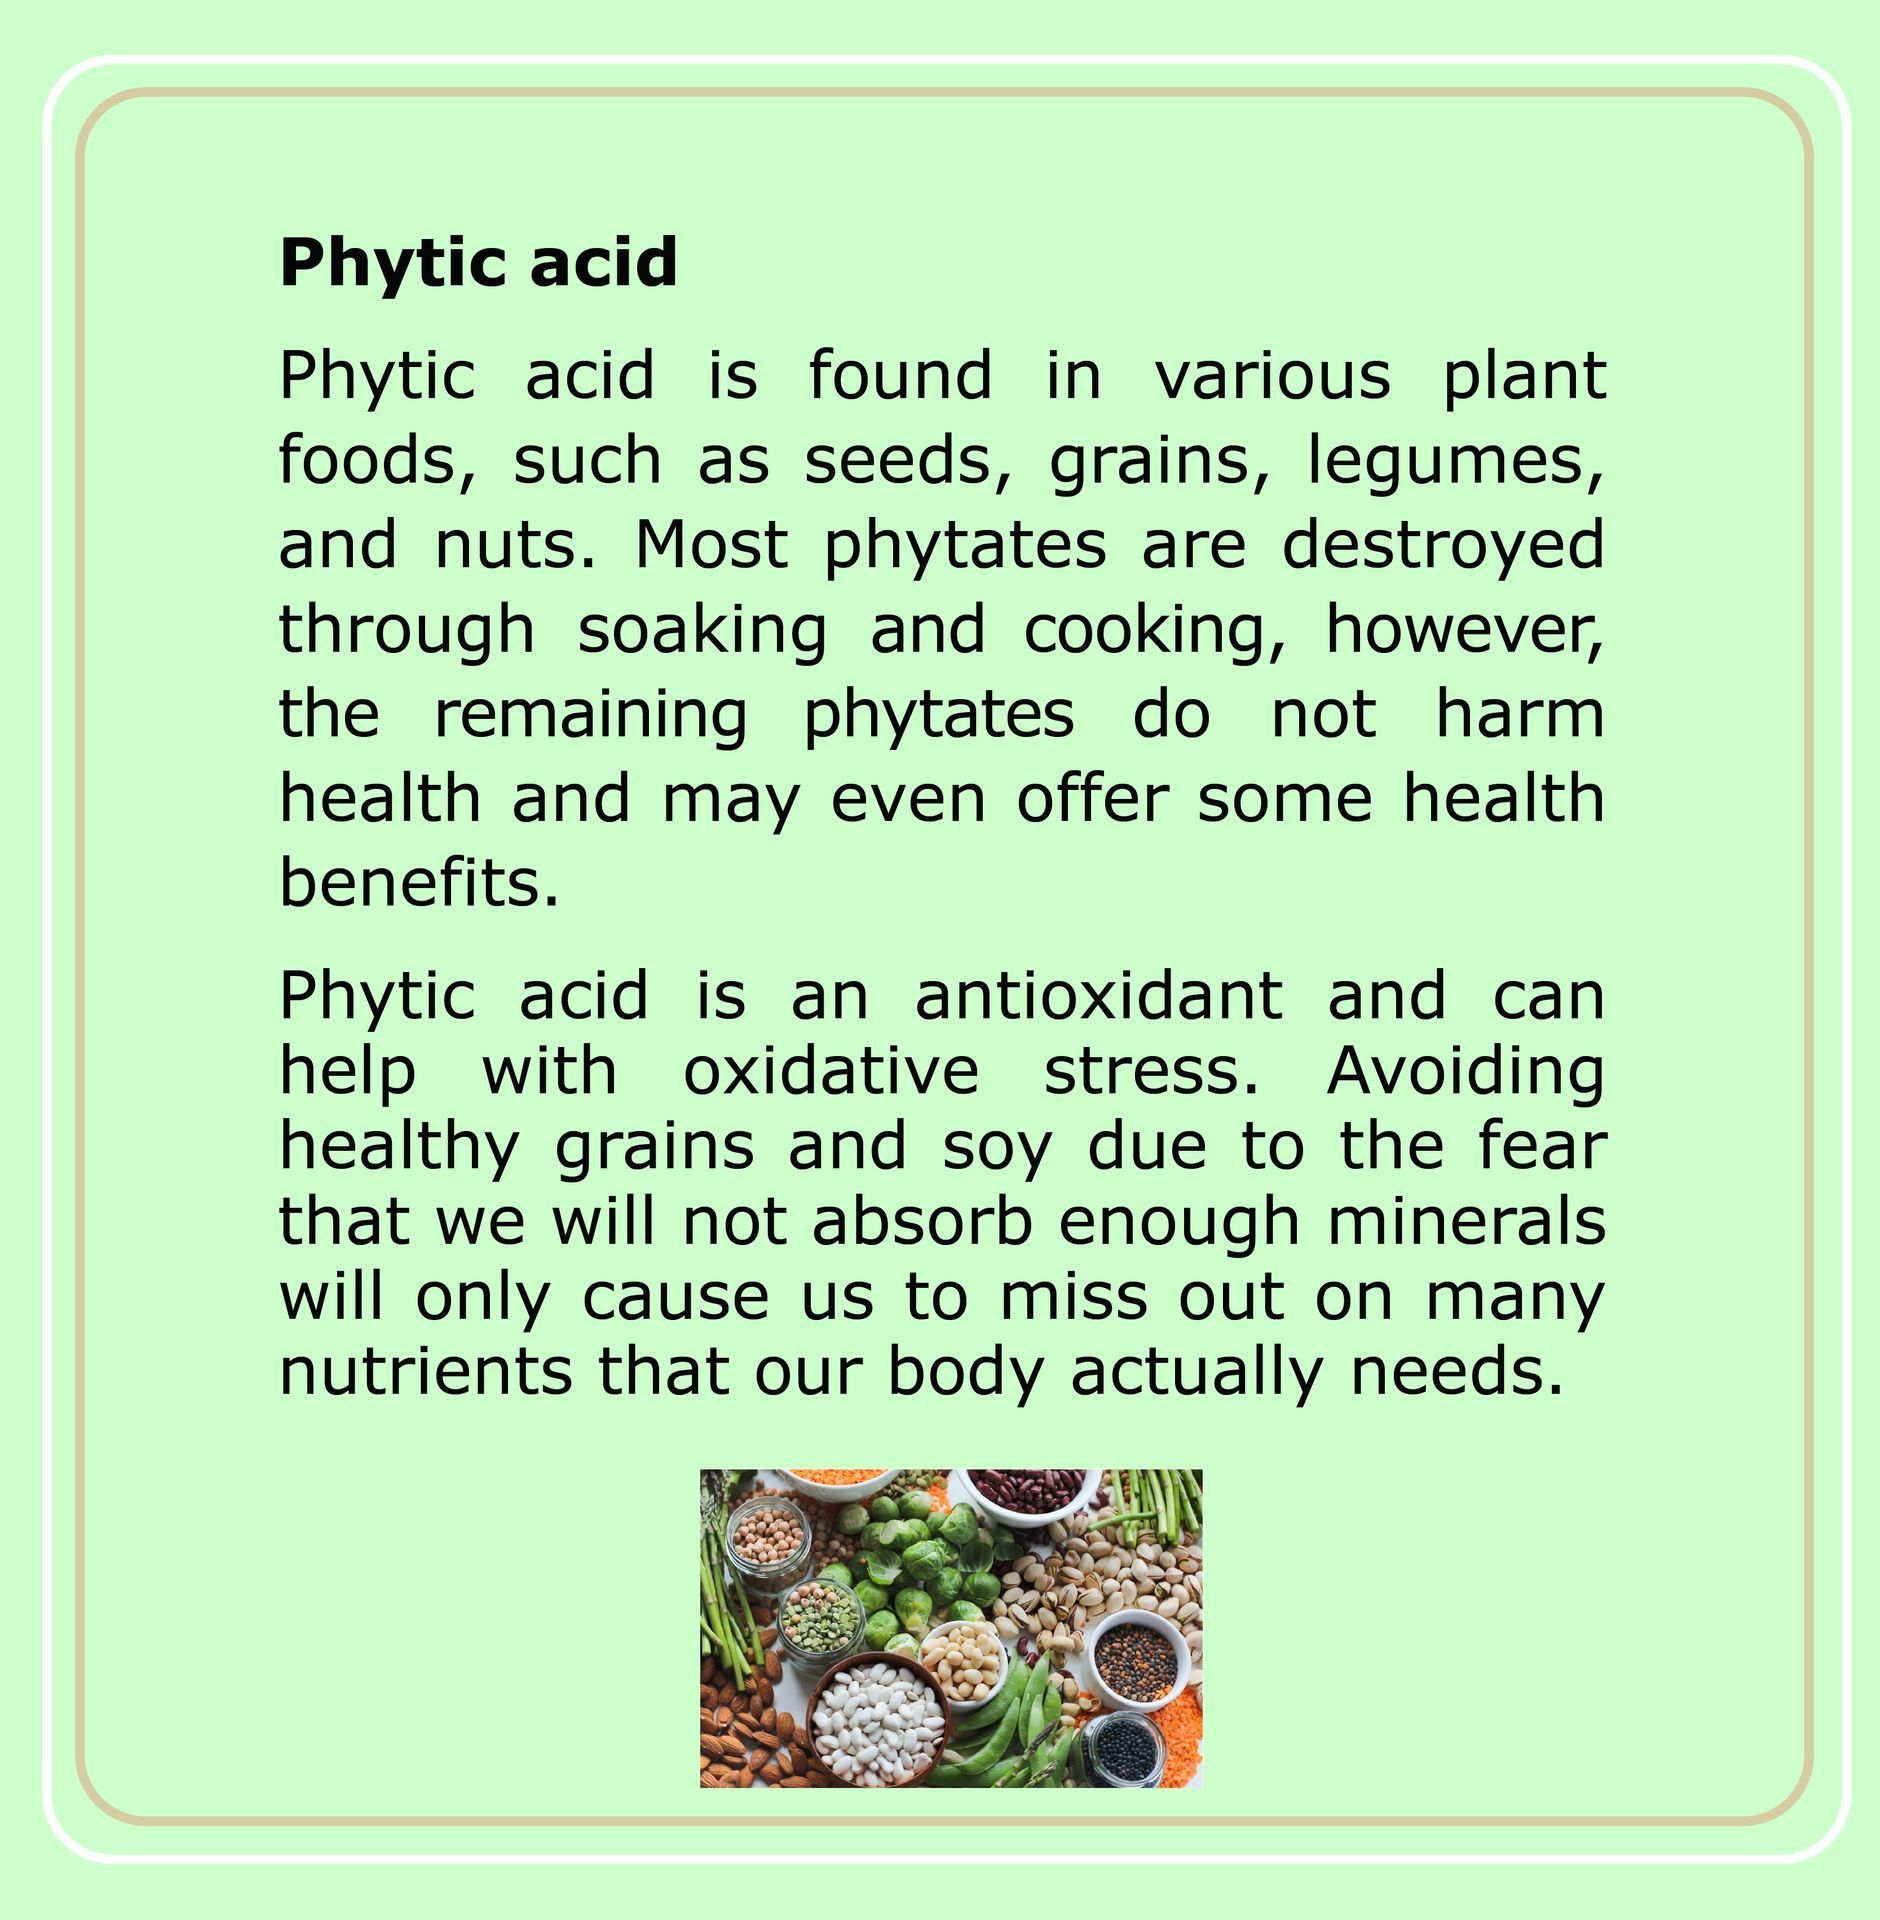 knowledge - Phytic acid